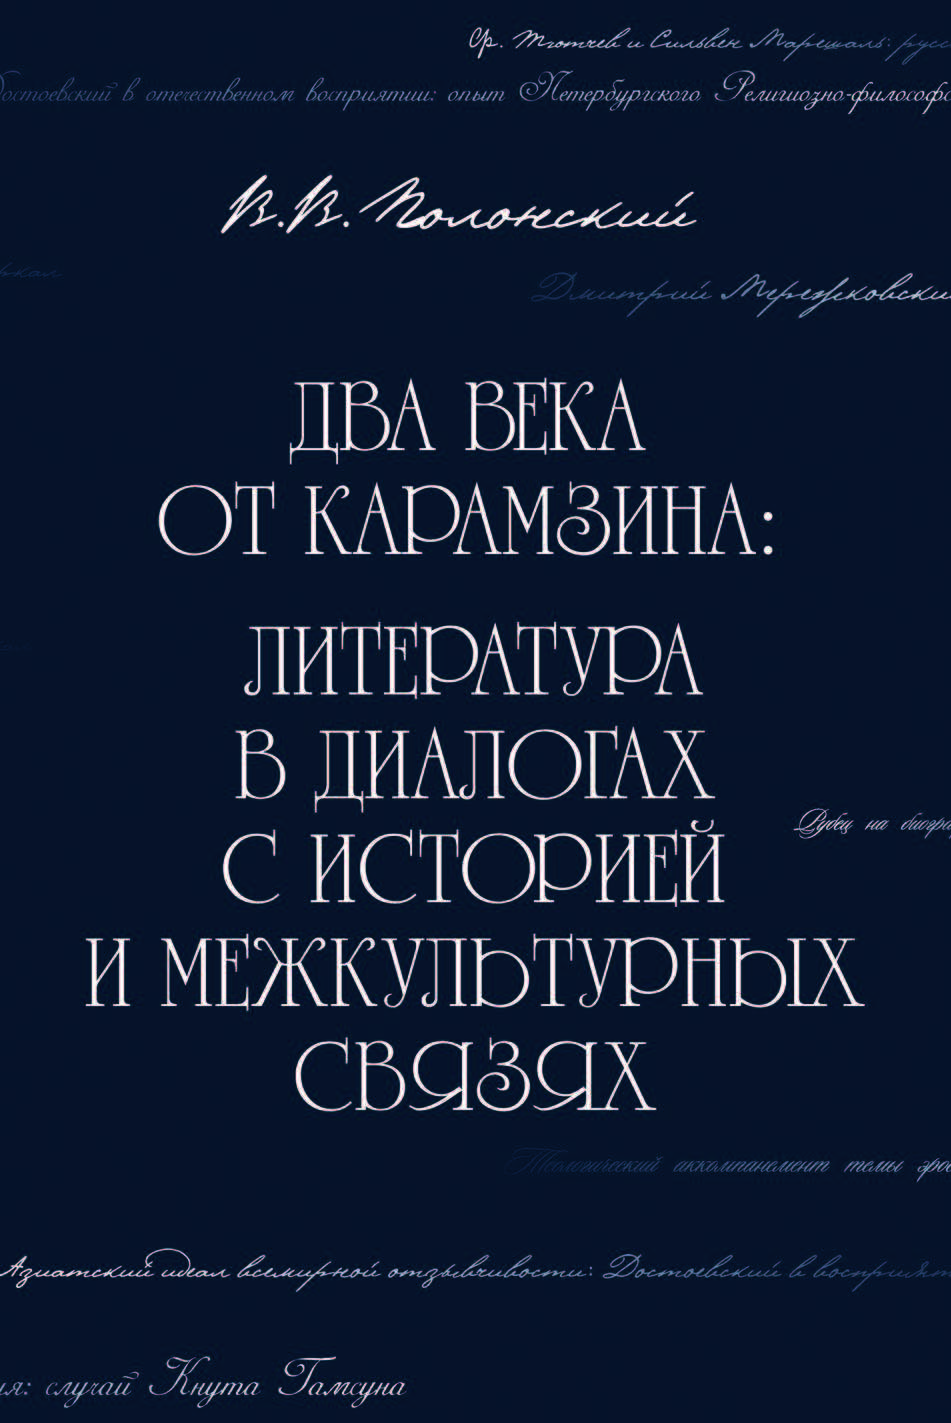 Cover of Два века от Карамзина: Литература в диалогах с историей и межкультурных связях